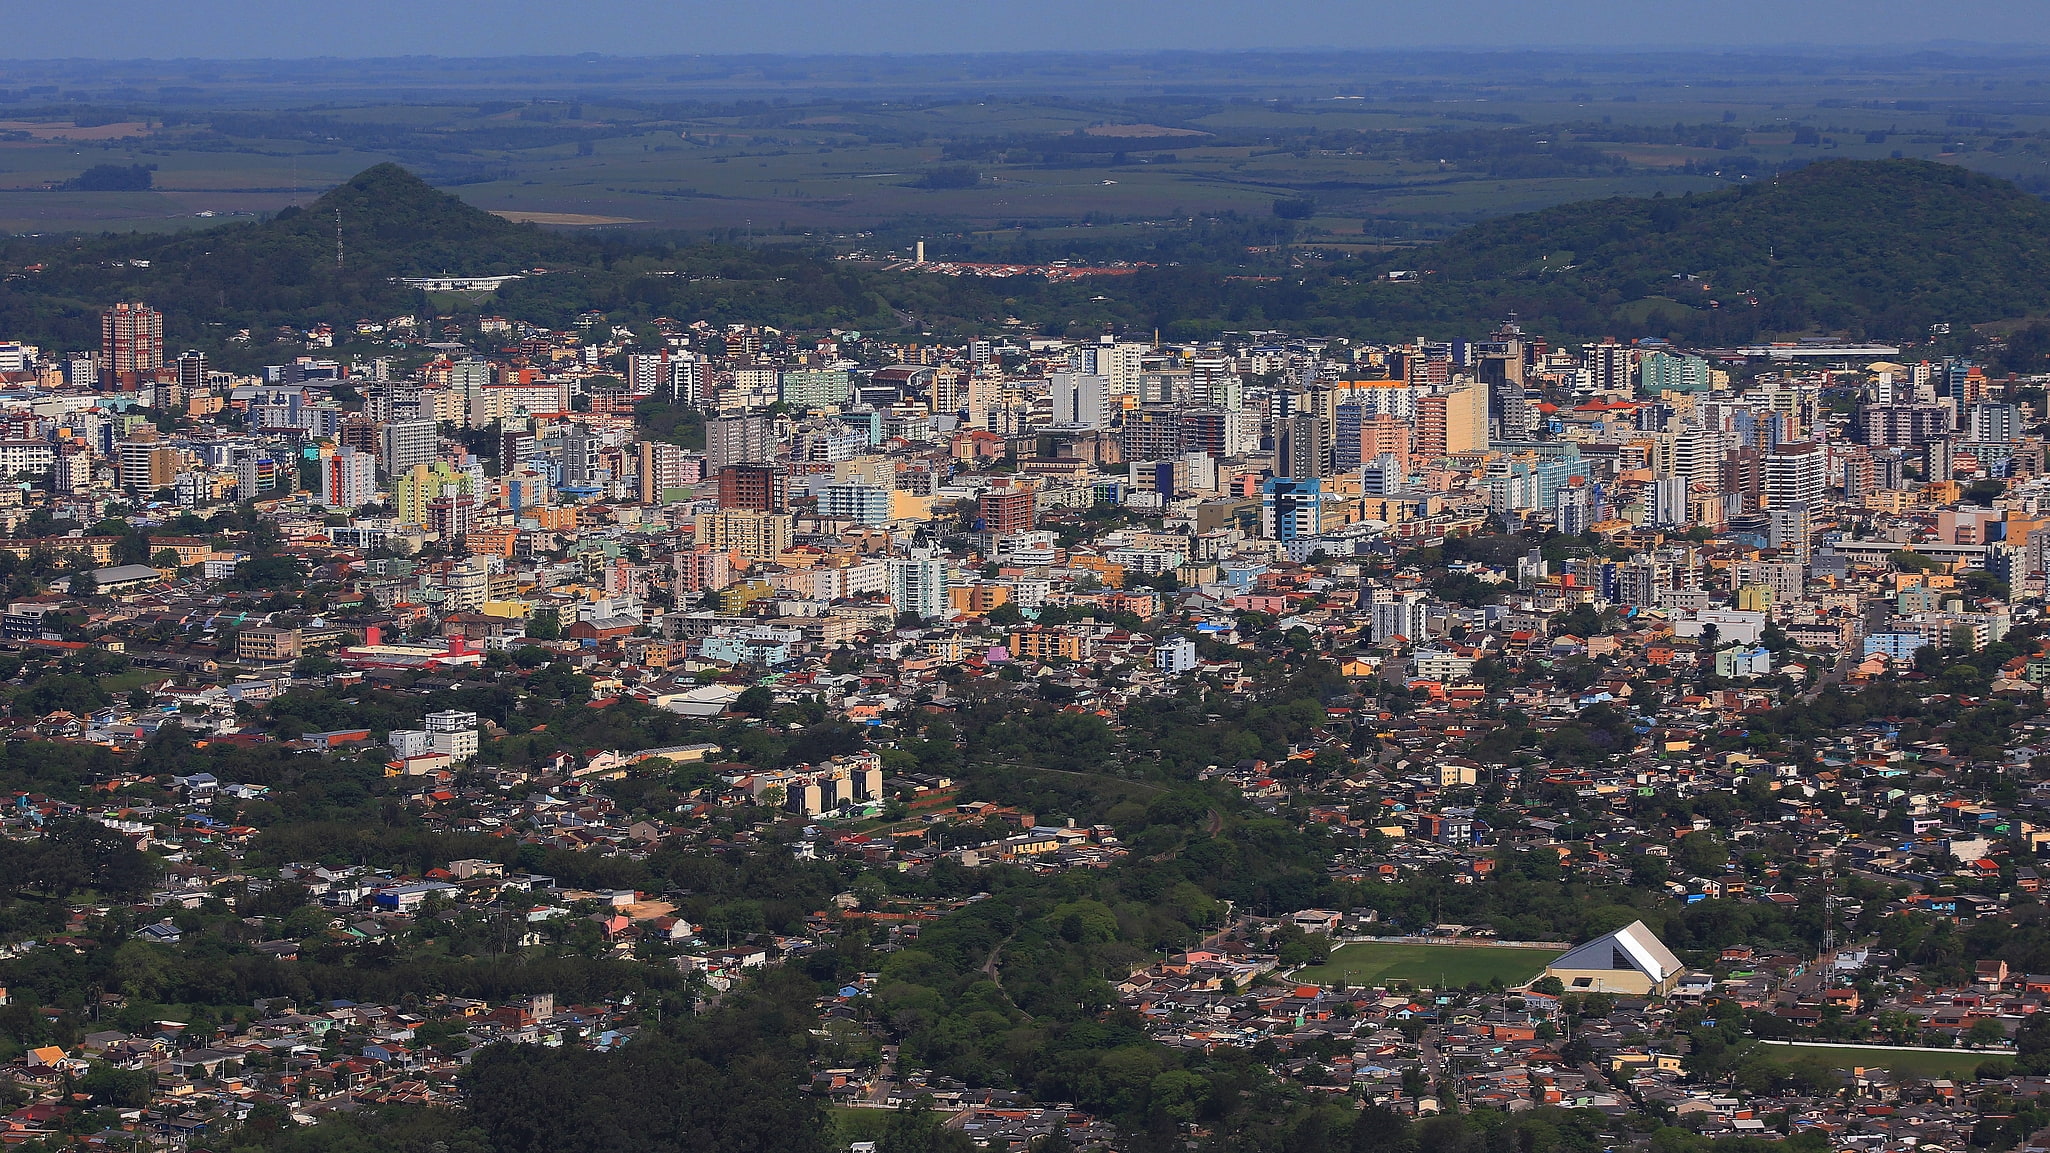 Santa Maria, Brazil